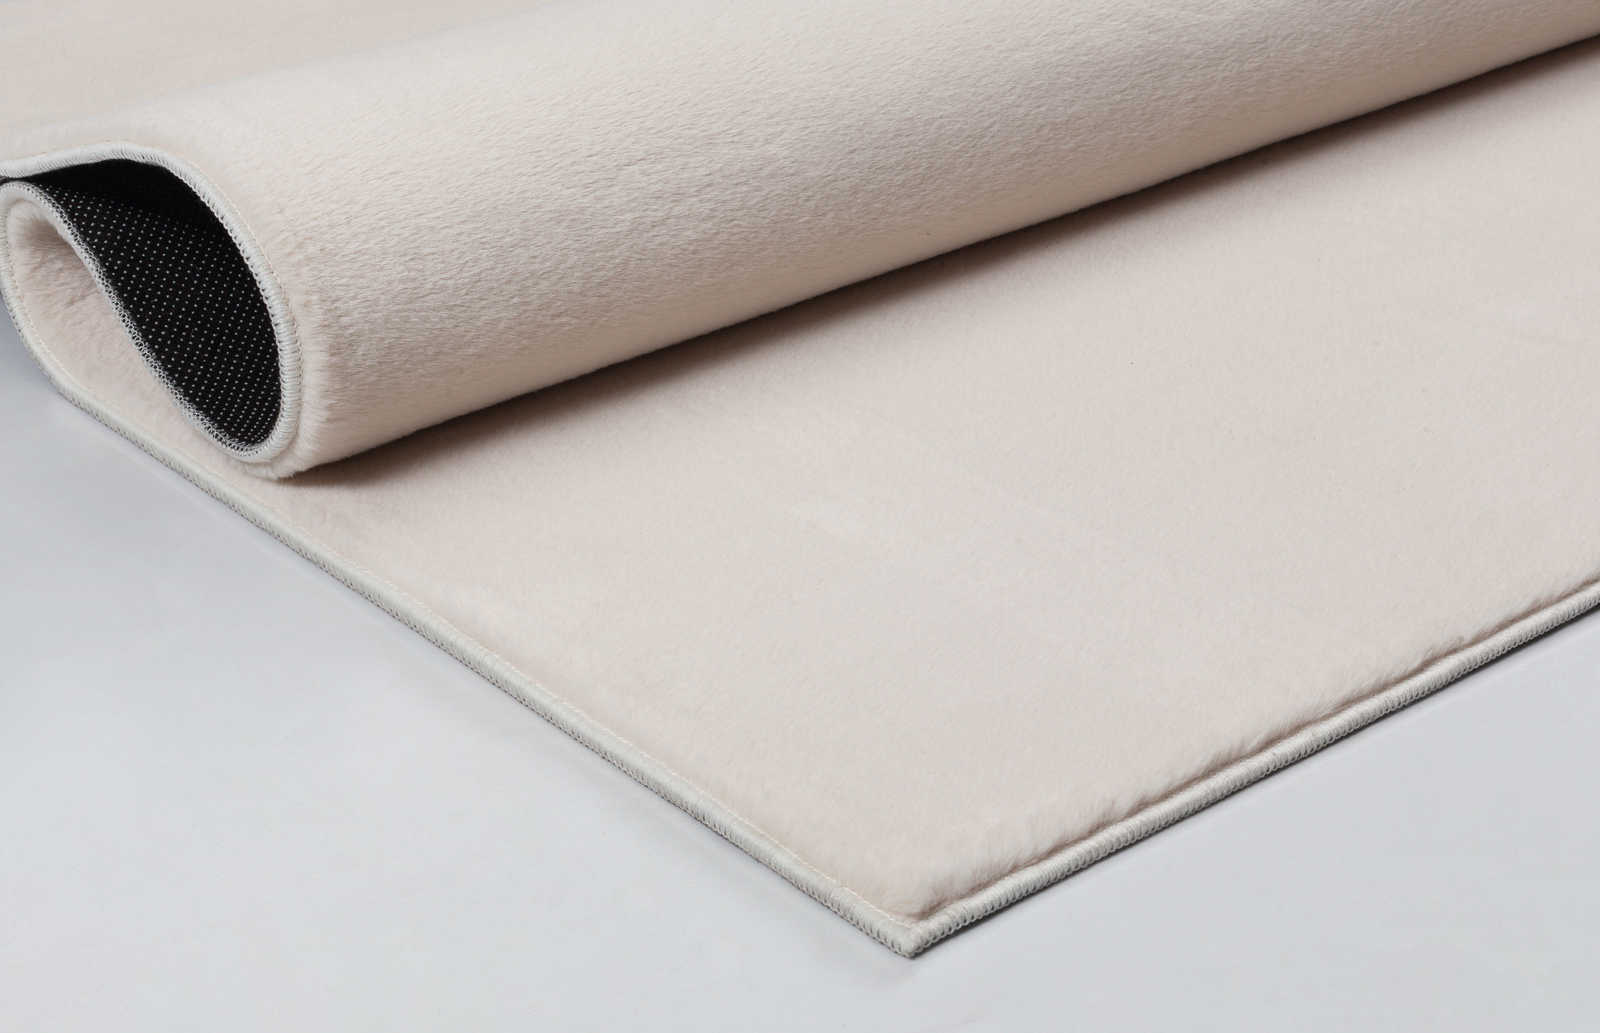             Plain high pile carpet in soft beige - 140 x 70 cm
        